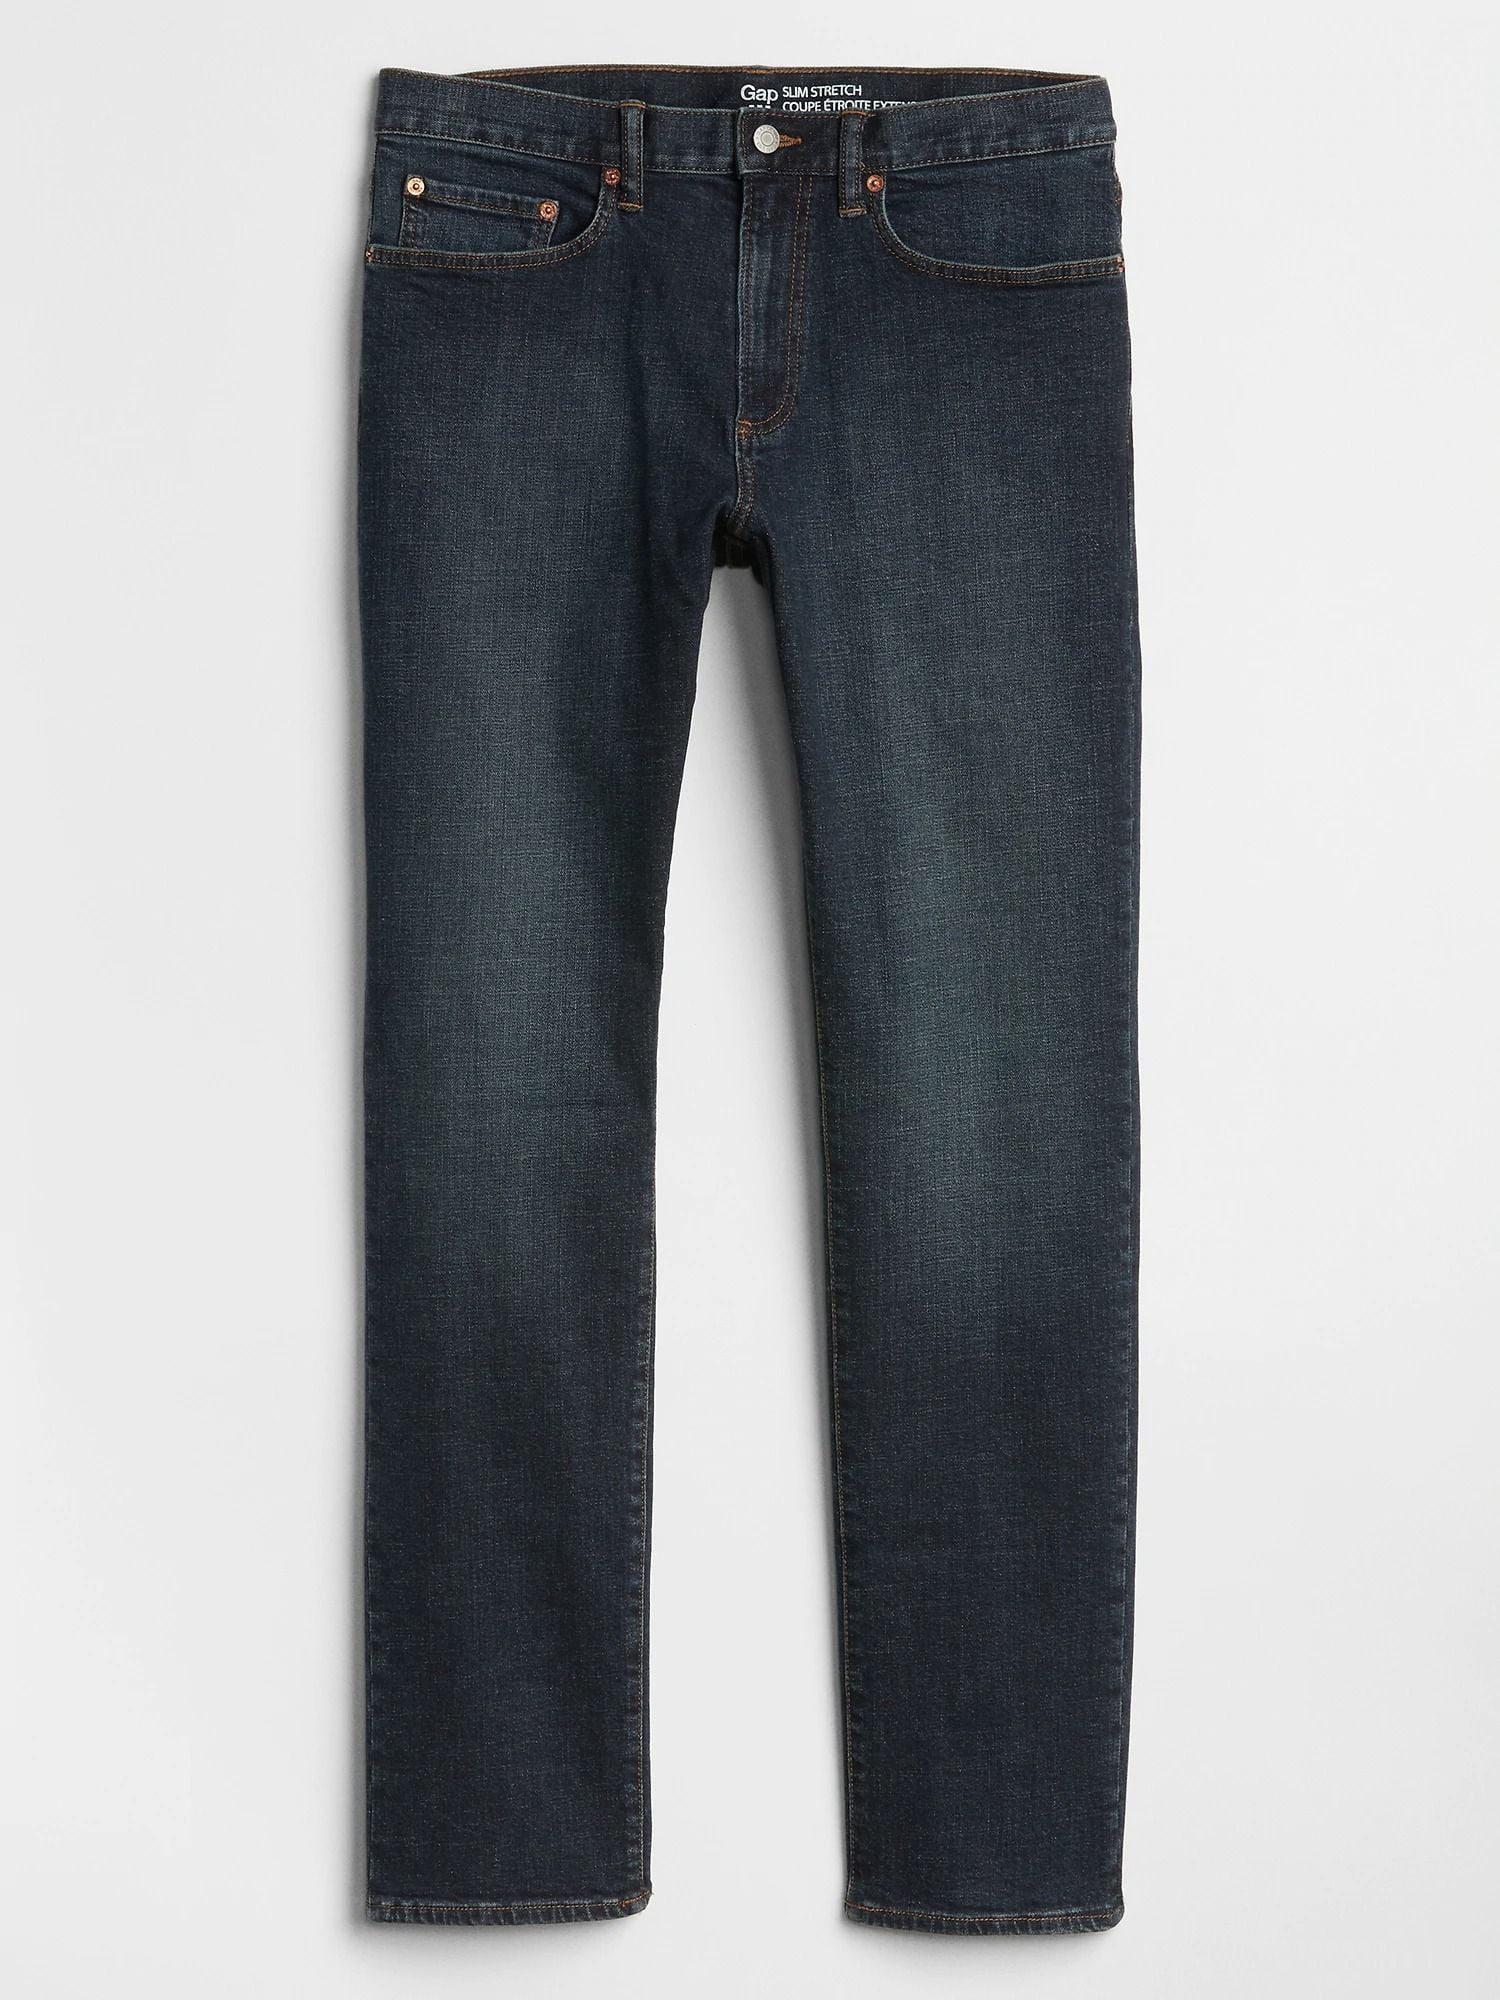 Quần Jean Nam Gap Slim Fit Jeans with GapFlex Medium Dark Tint